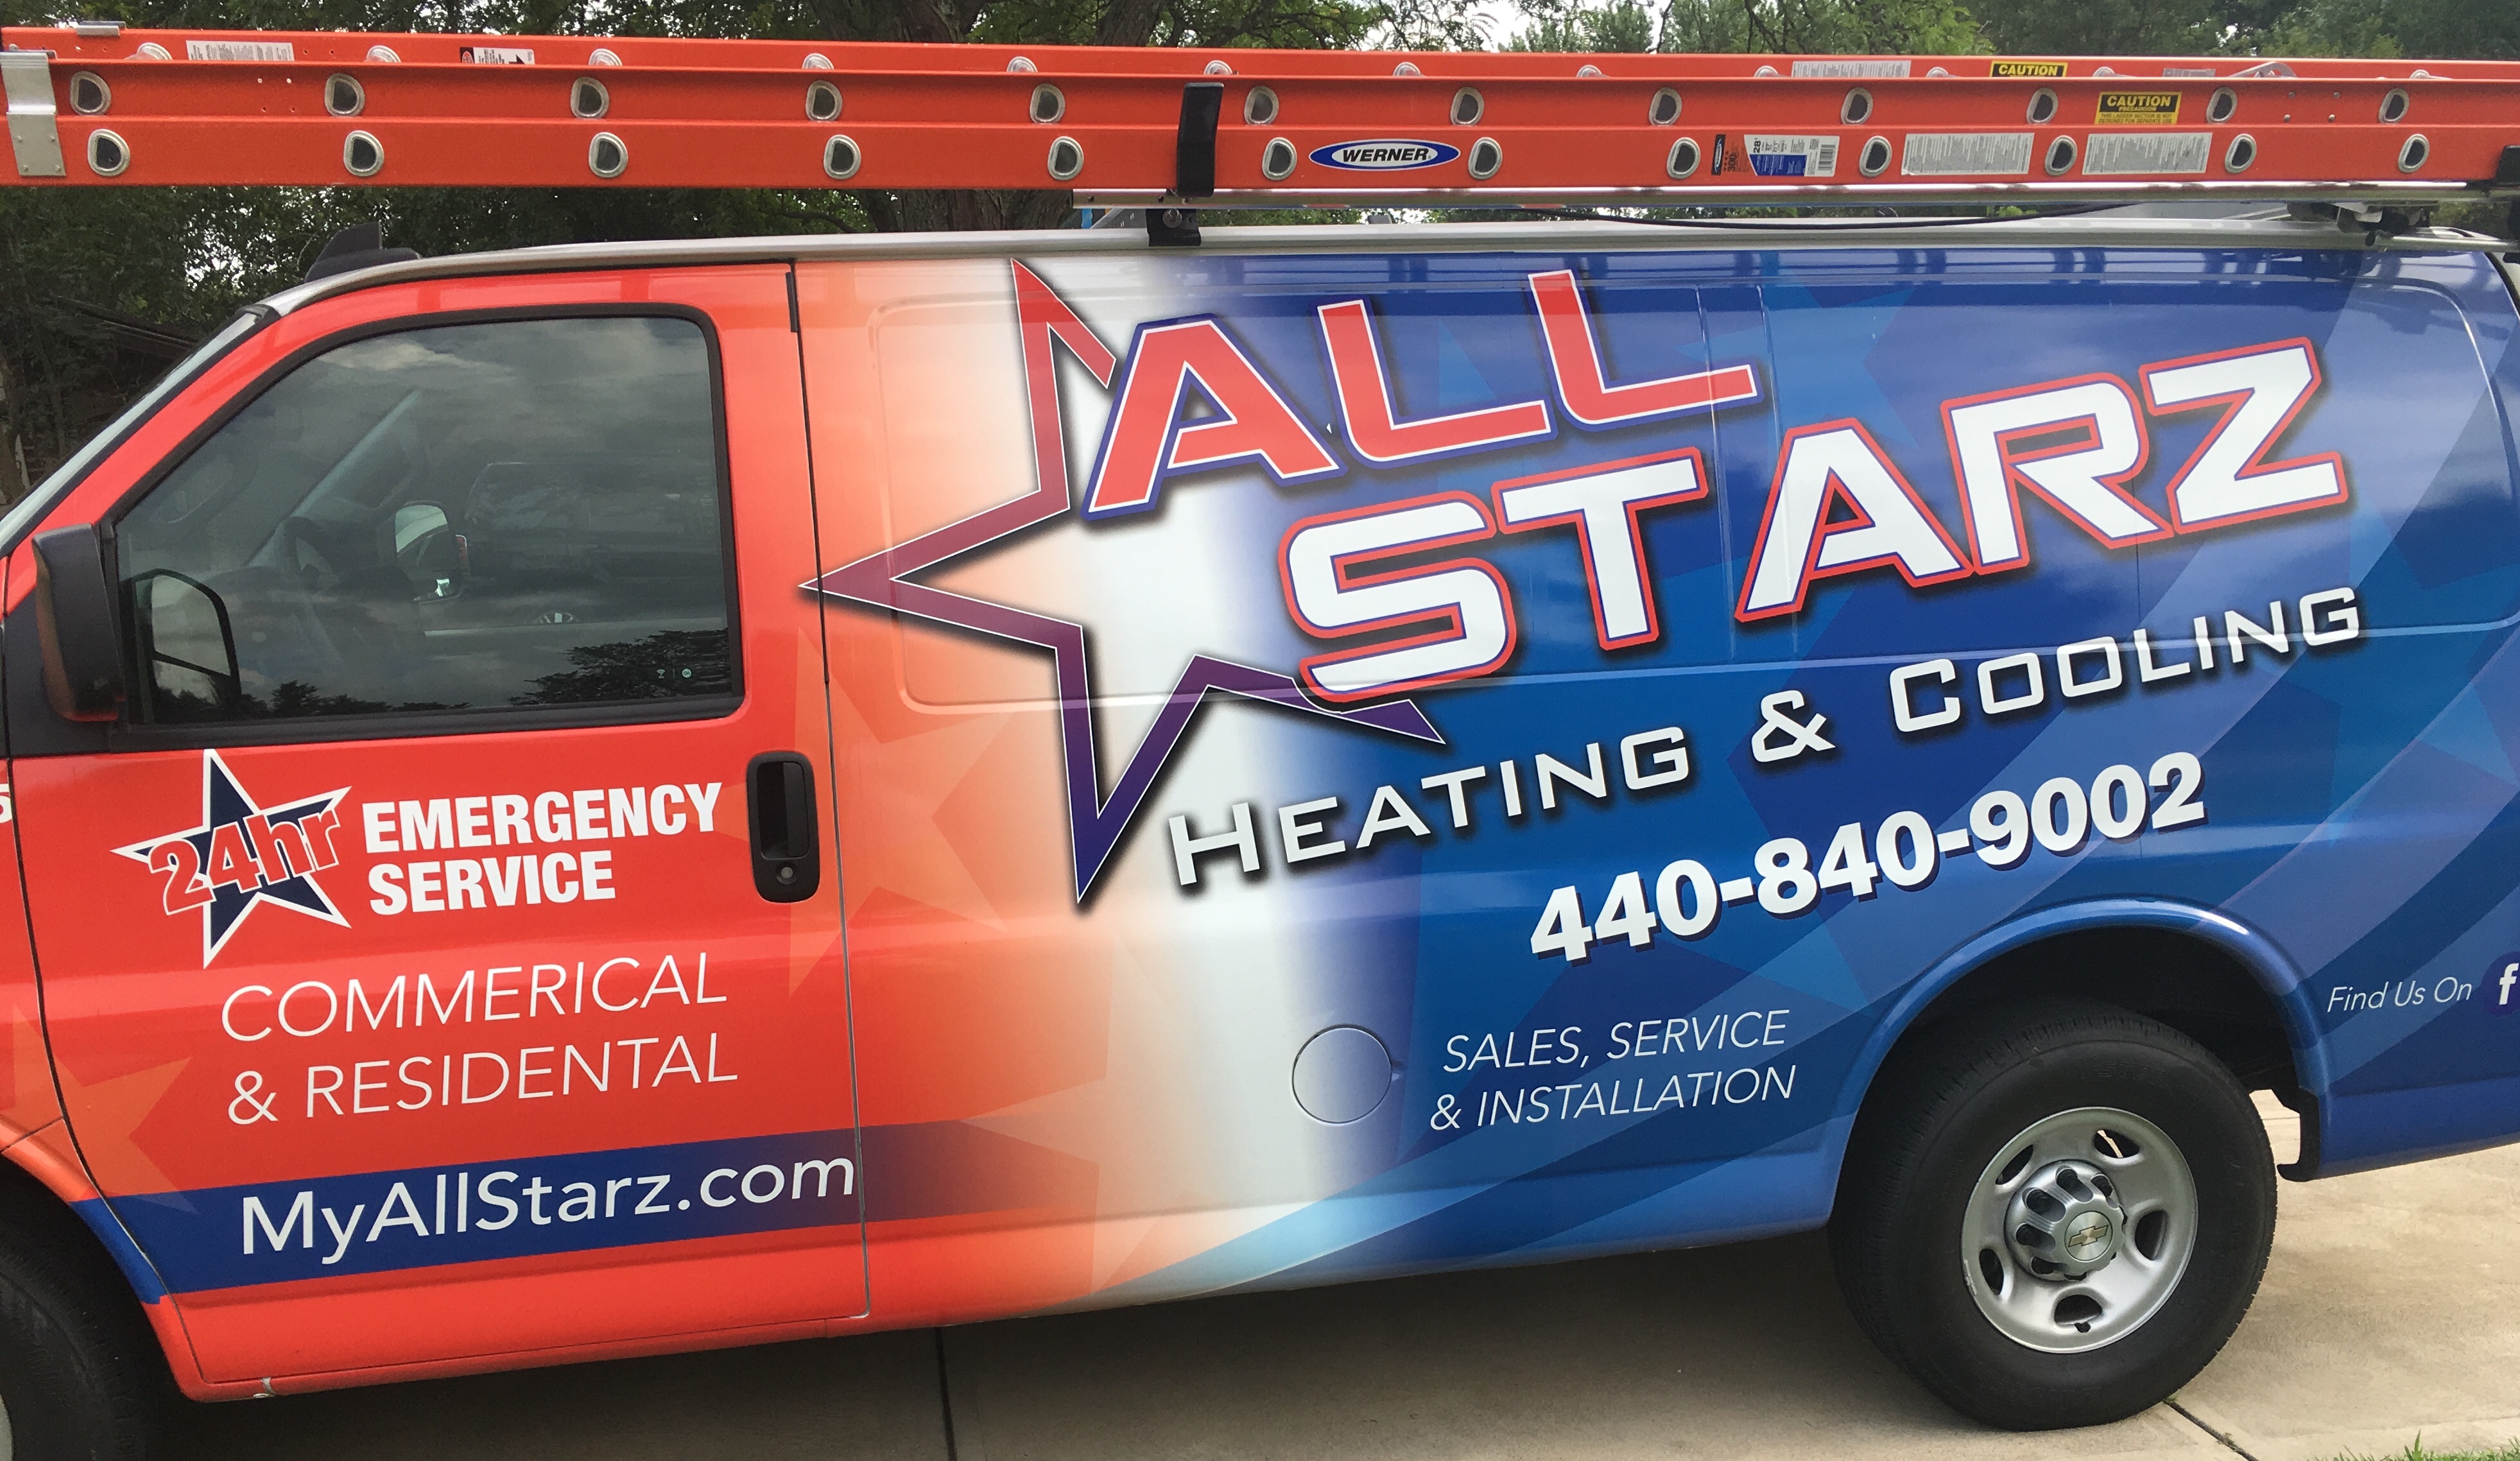 All Starz Heating & Cooling, LLC Strongsville (440)840-9002